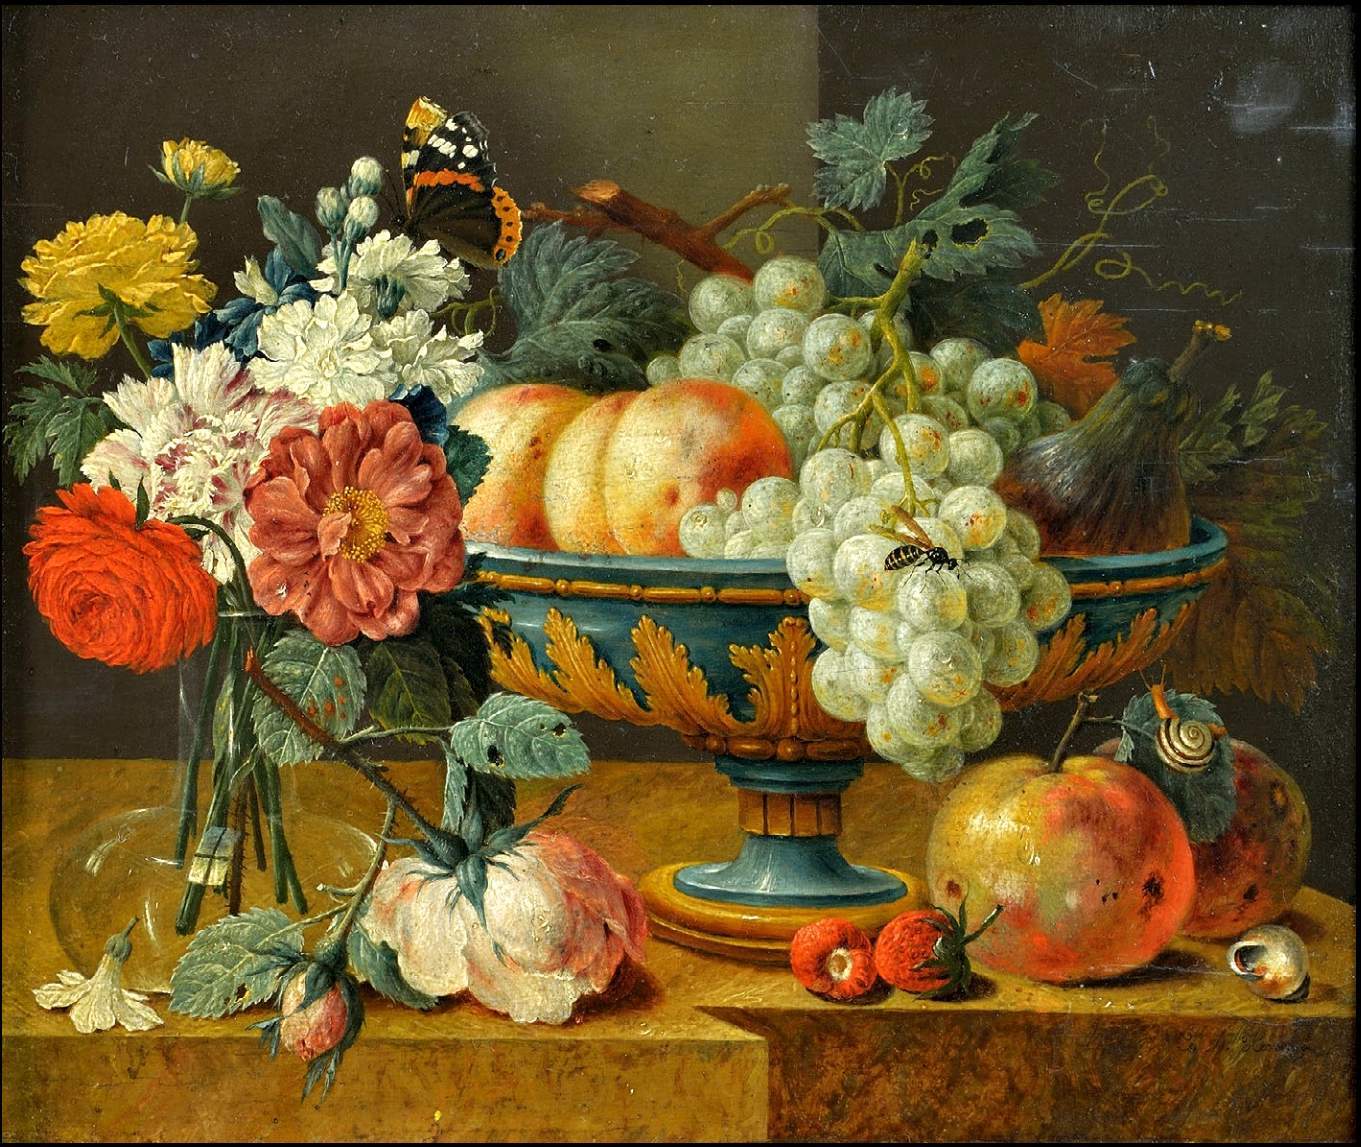 Fruit bowl with flowers, Jan Davidsz. de Heem